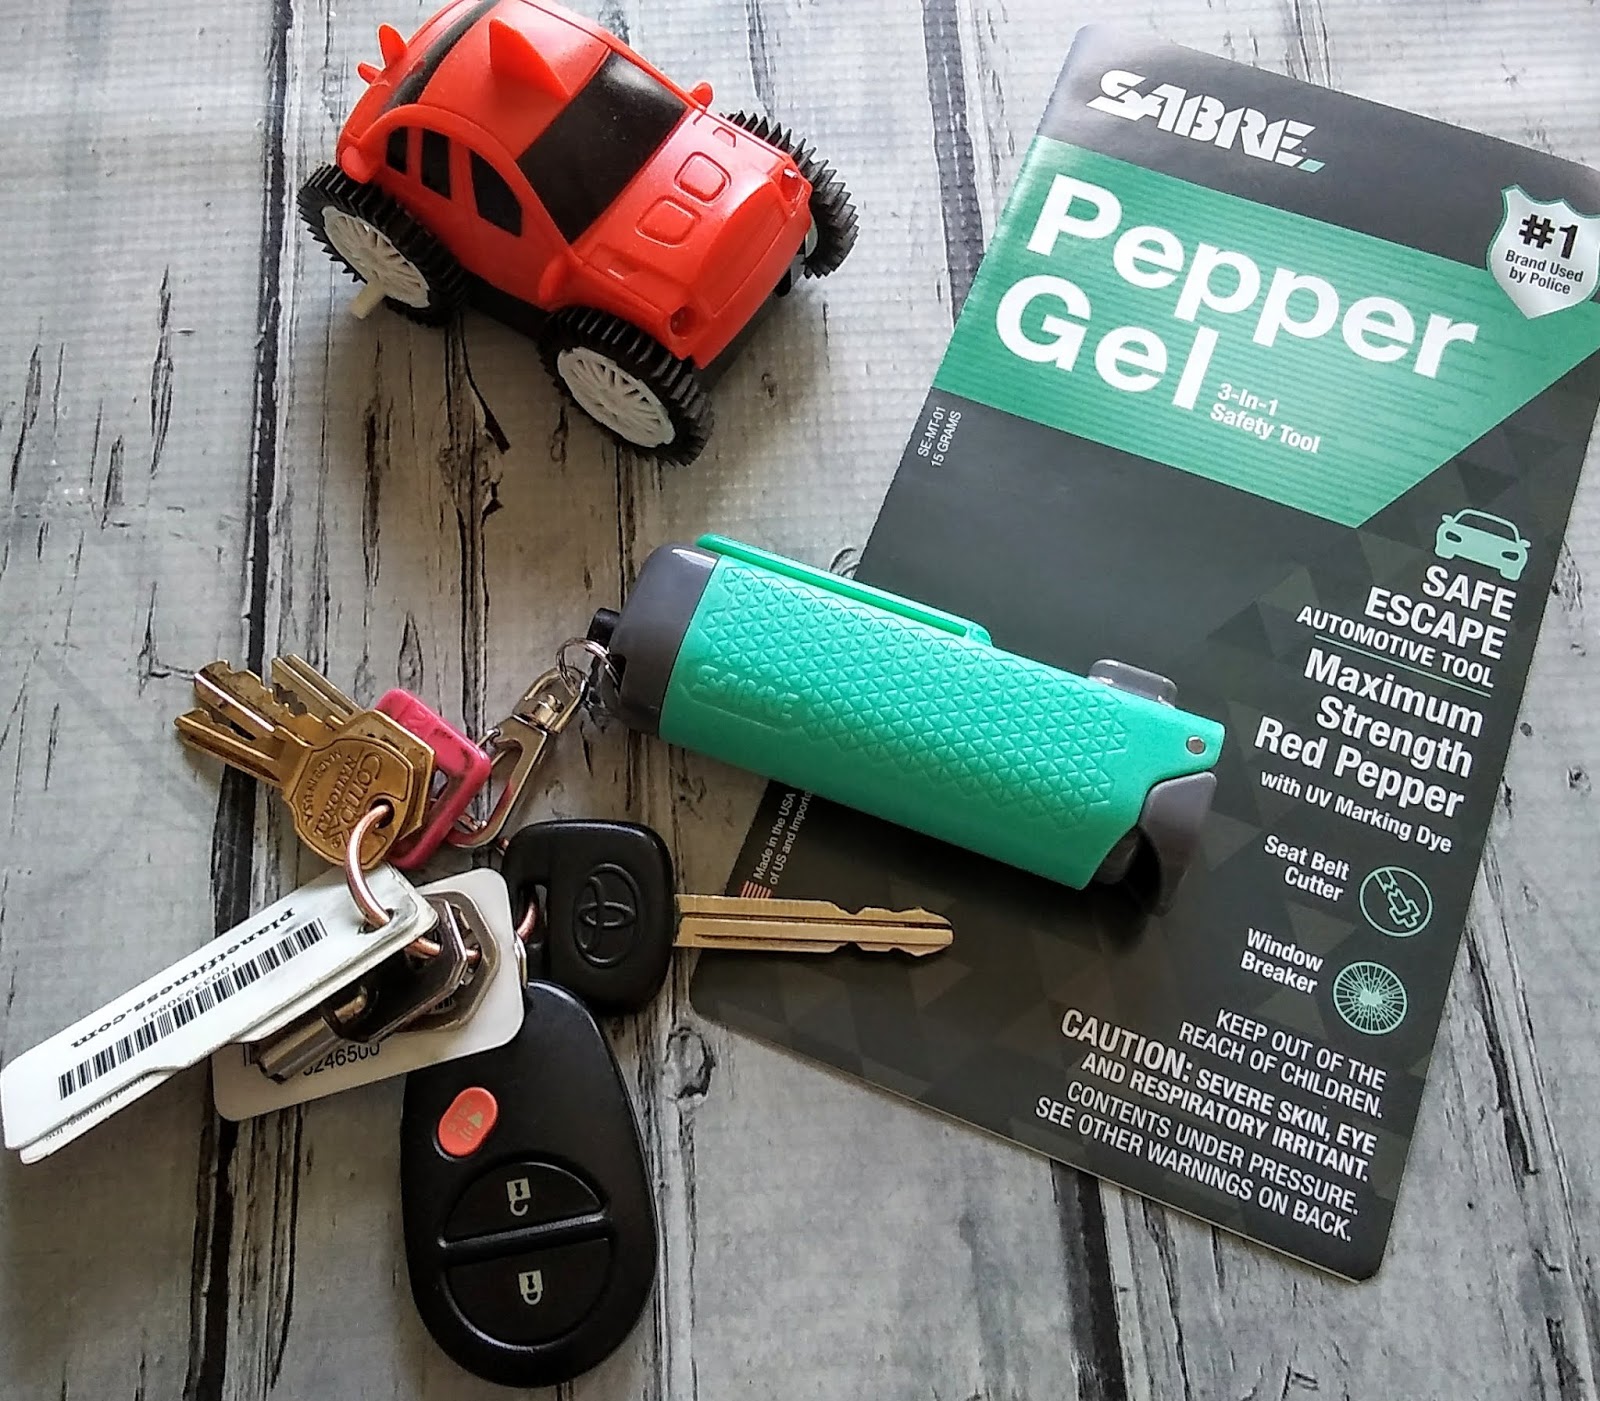 SABRE Safe Escape 3-In-1 Pepper Gel With Seat Belt Cutter and Window  Breaker